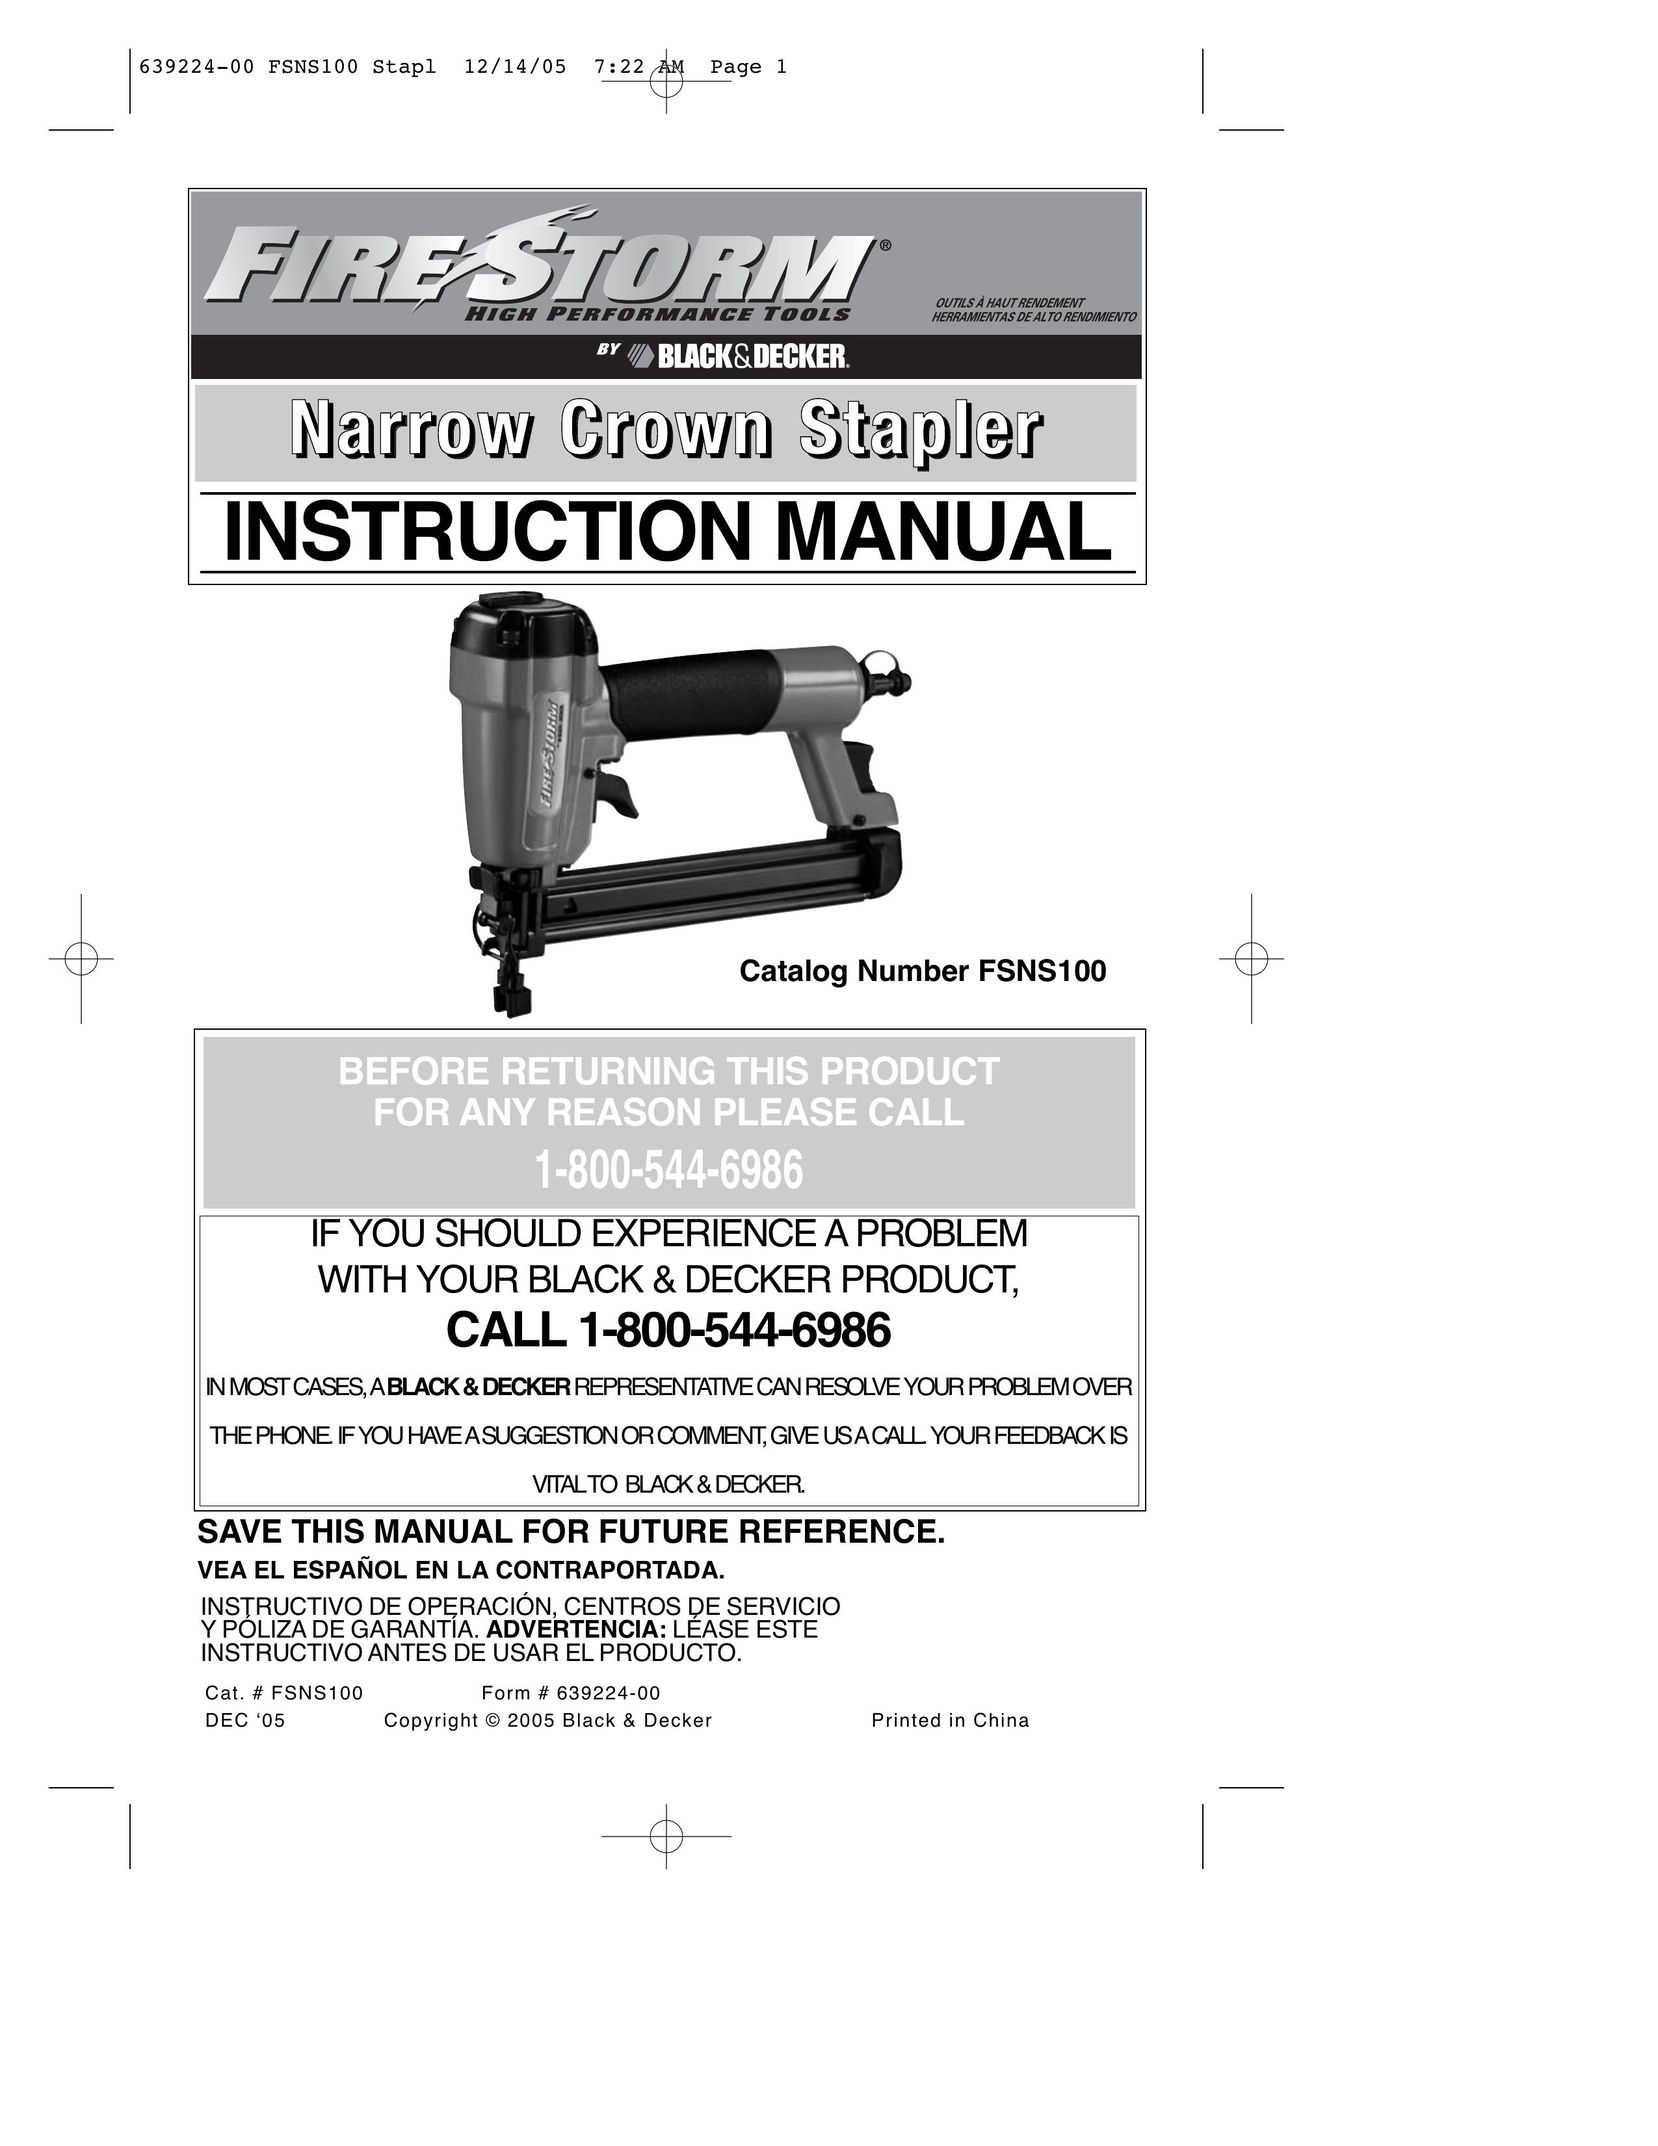 Black & Decker FSNS100 Staple Gun User Manual